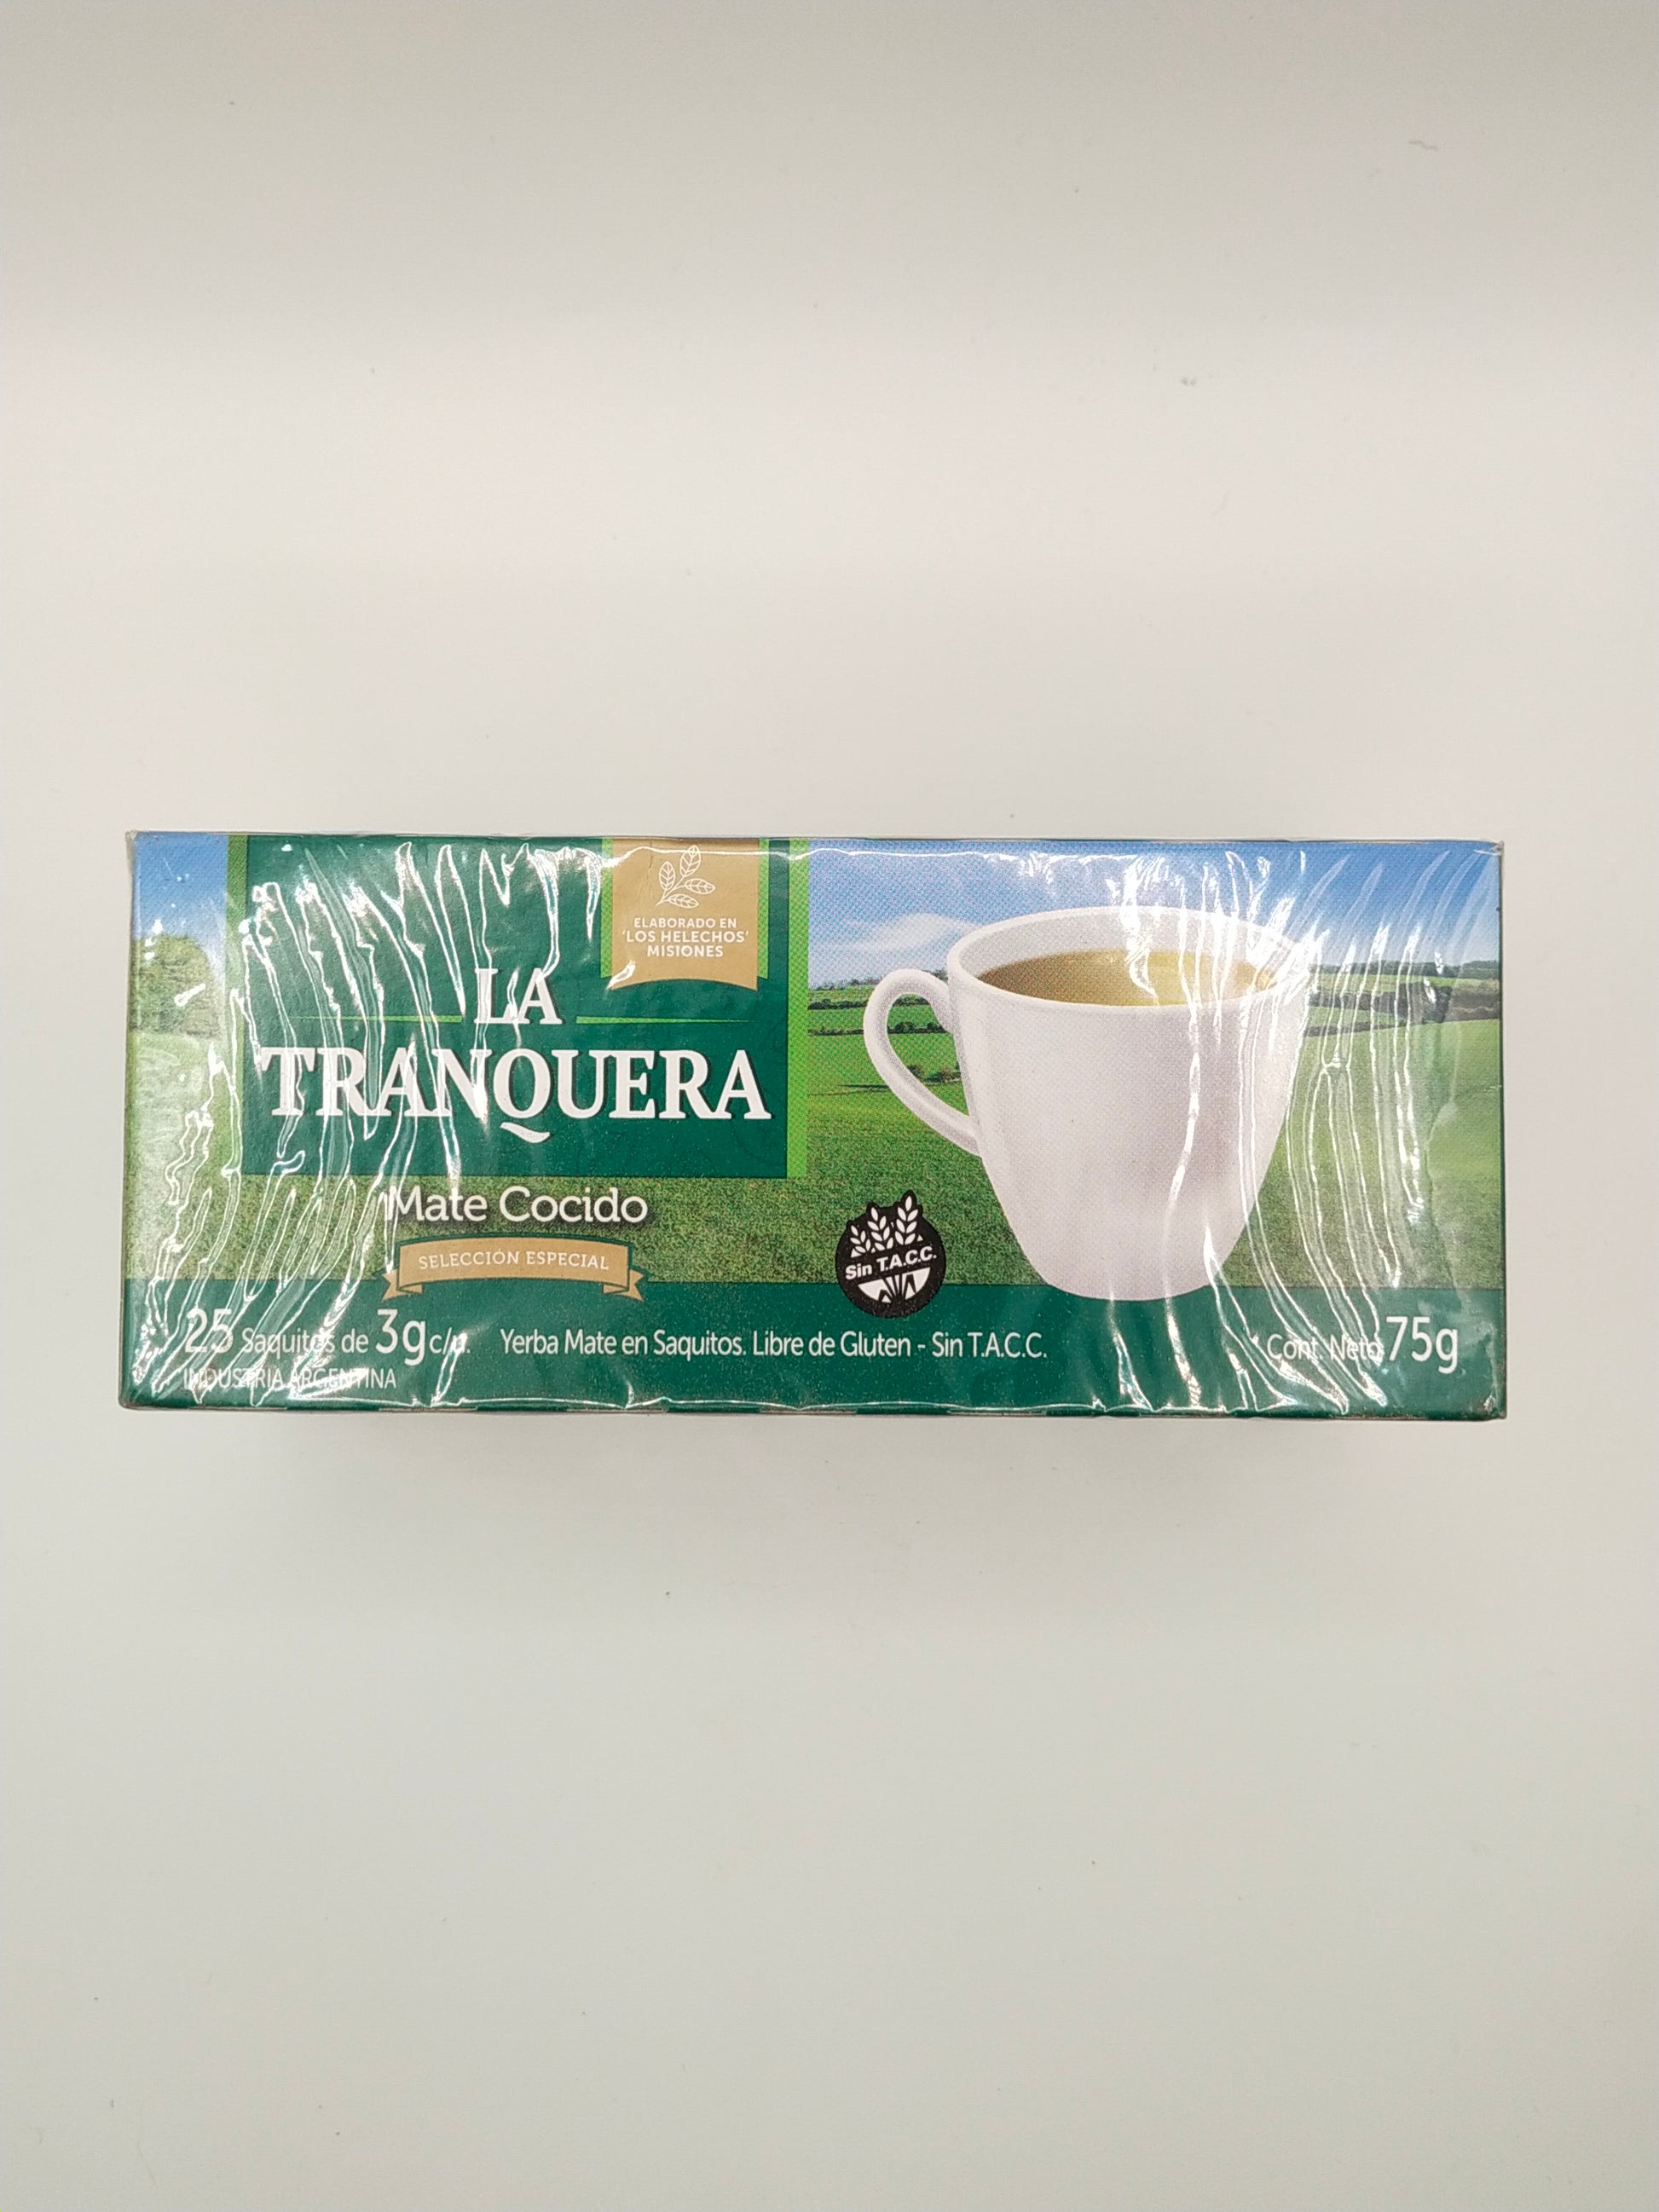 La Tranquera Mate Cocido Special Selection - Instant Brew Mate in Tea Bags  (50 tea bags)